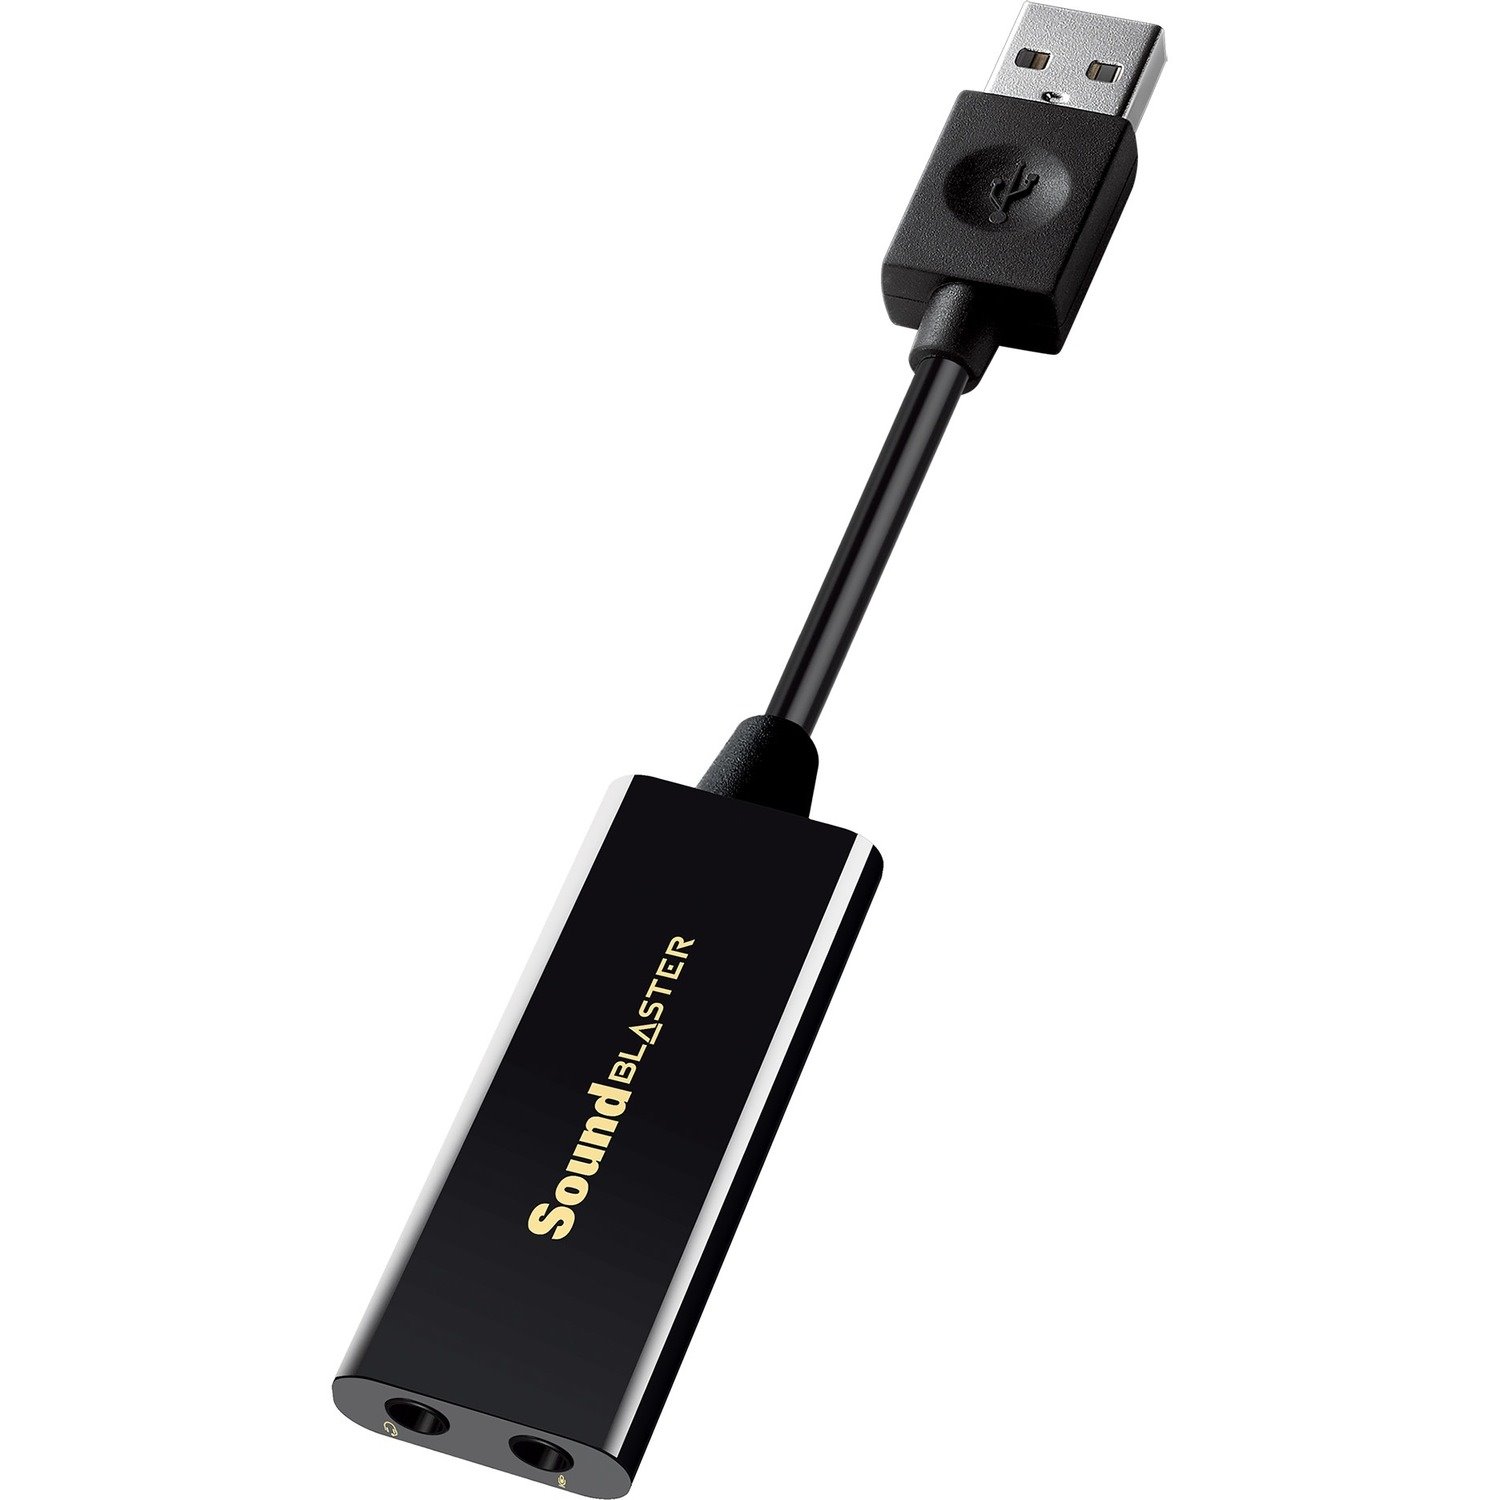 Sound Blaster PLAY! 3 USB DAC Amp and External Sound Card